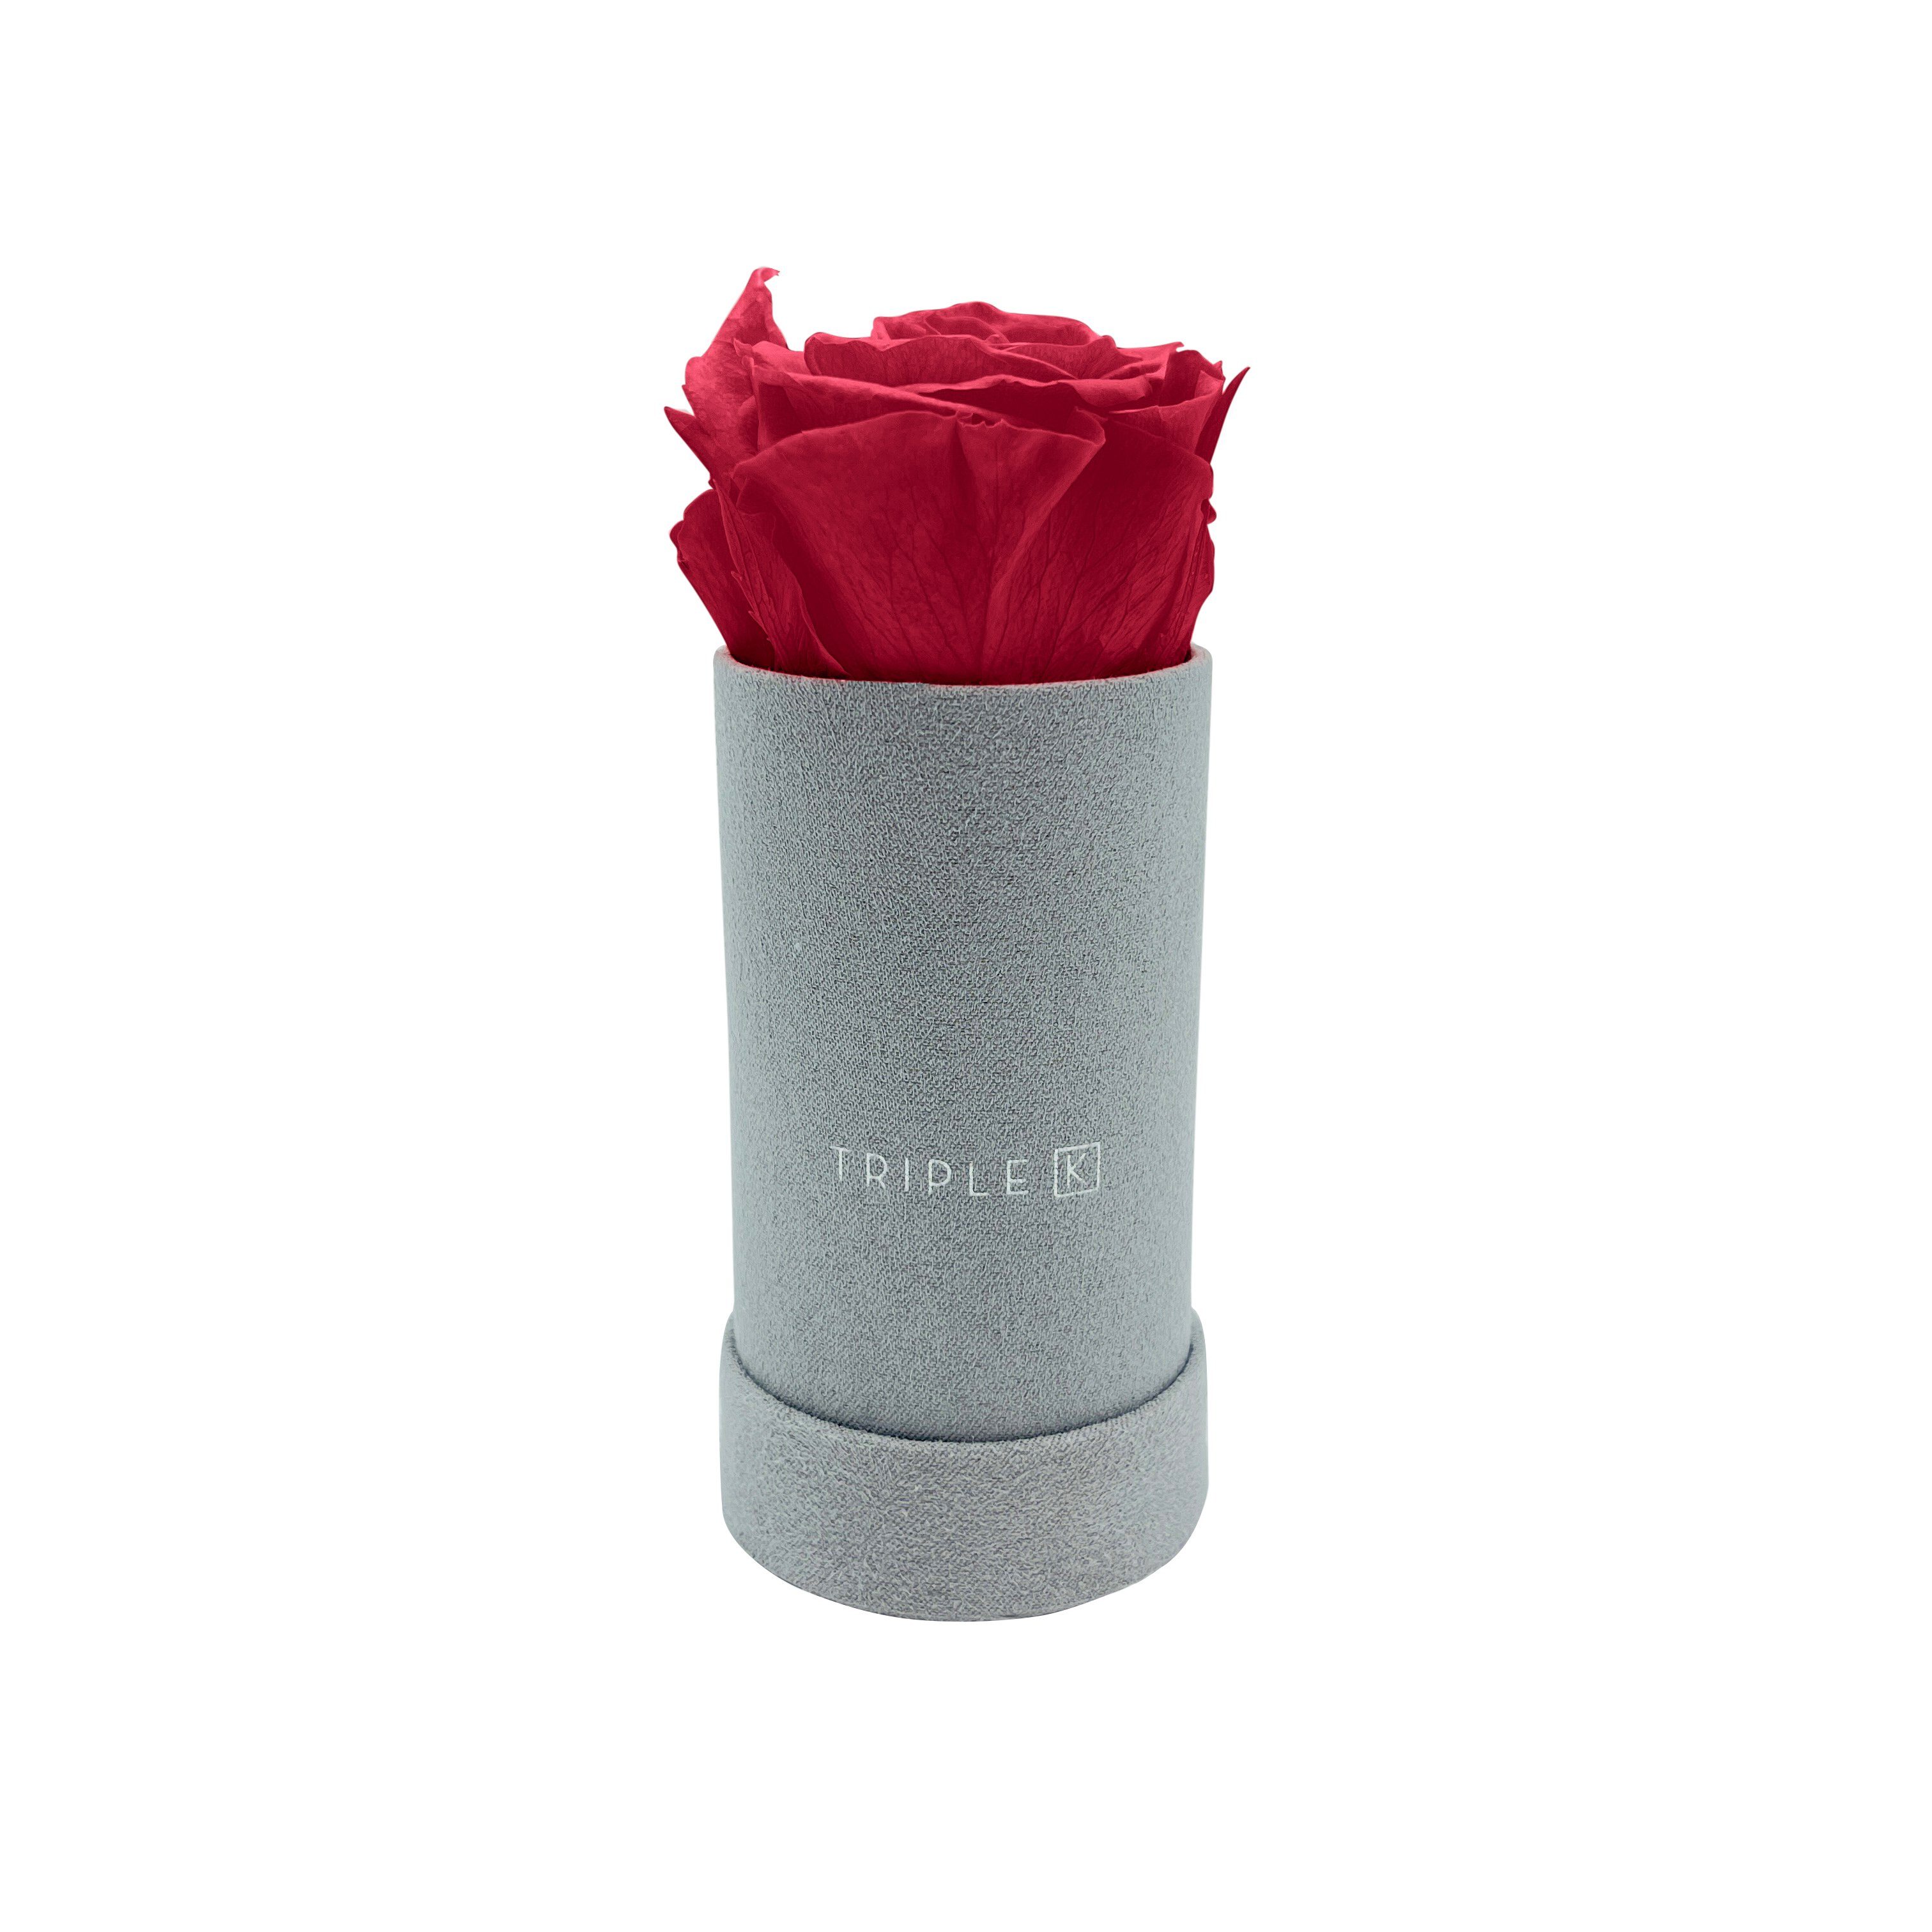 Kunstblume TRIPLE K - Rosenbox Flowerbox Inkl. Haltbar, TRIPLE Velvet mit Rosen, Rot Jahre K konservierten Infinity mit Rosen, bis Rose, Blumenbox Infinity Grußkarte 3